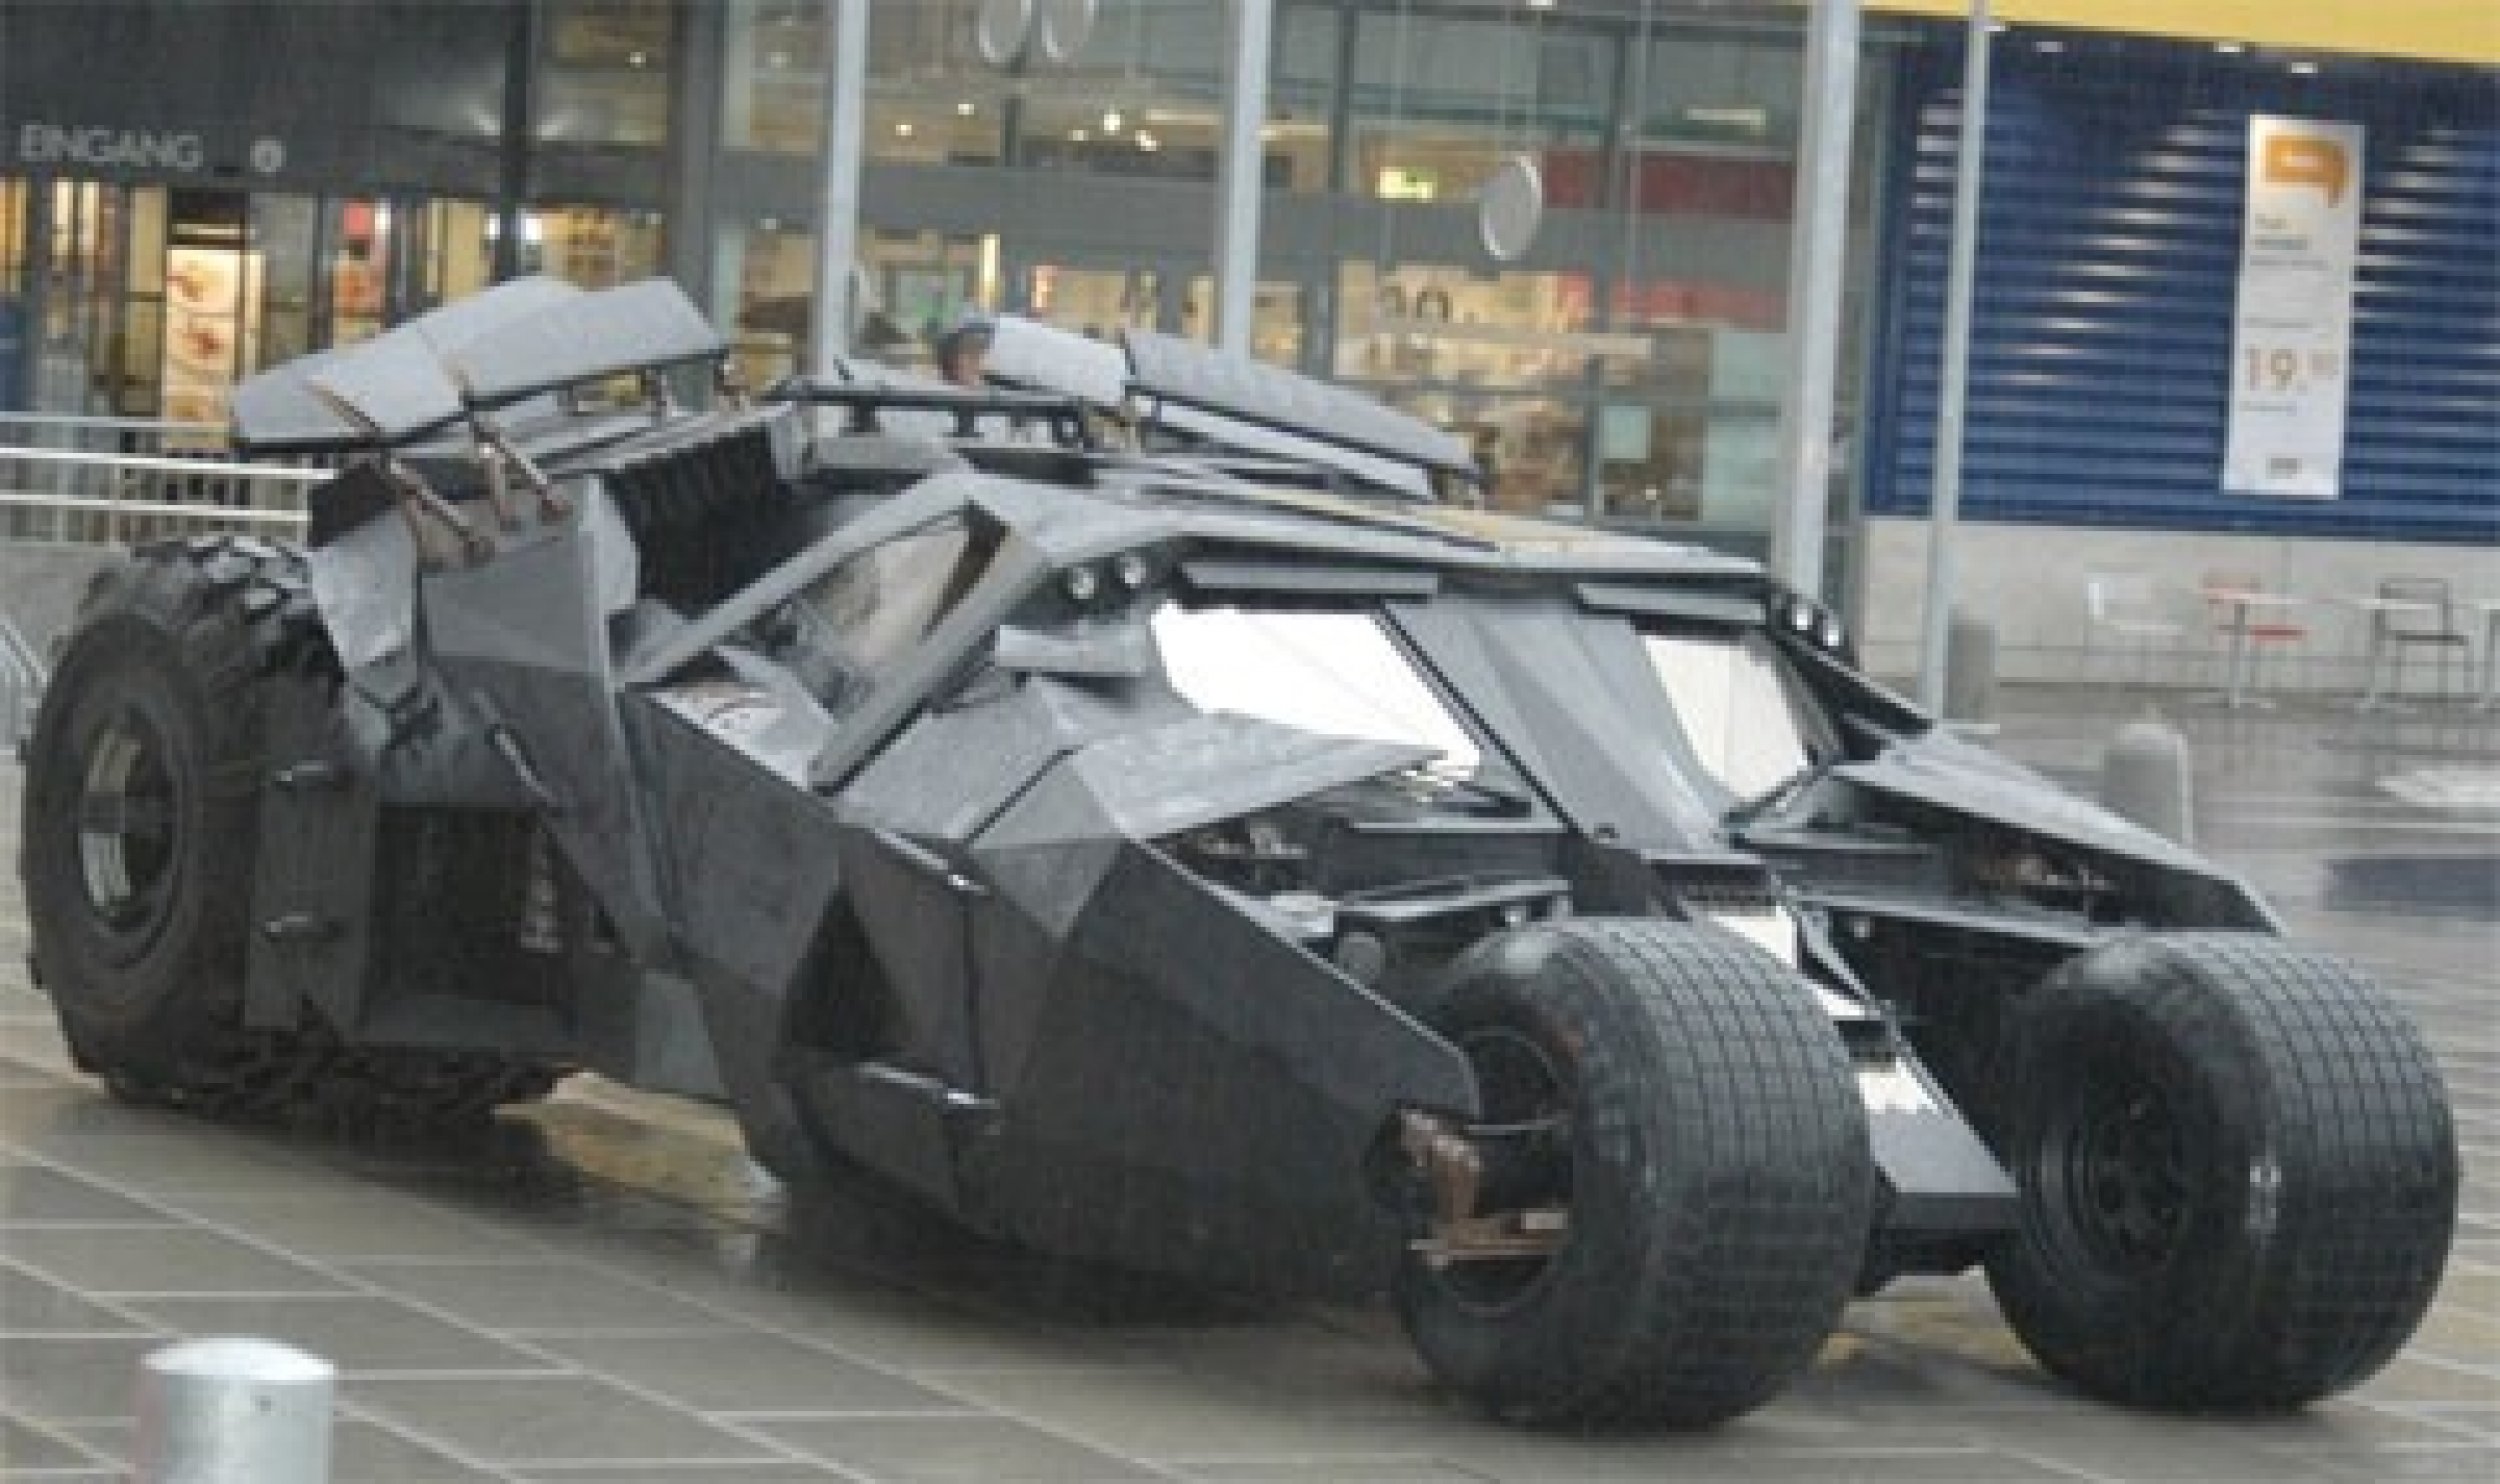 The Dark Knight Rises Teaser Trailer Photos, Batmobile, and More Photos